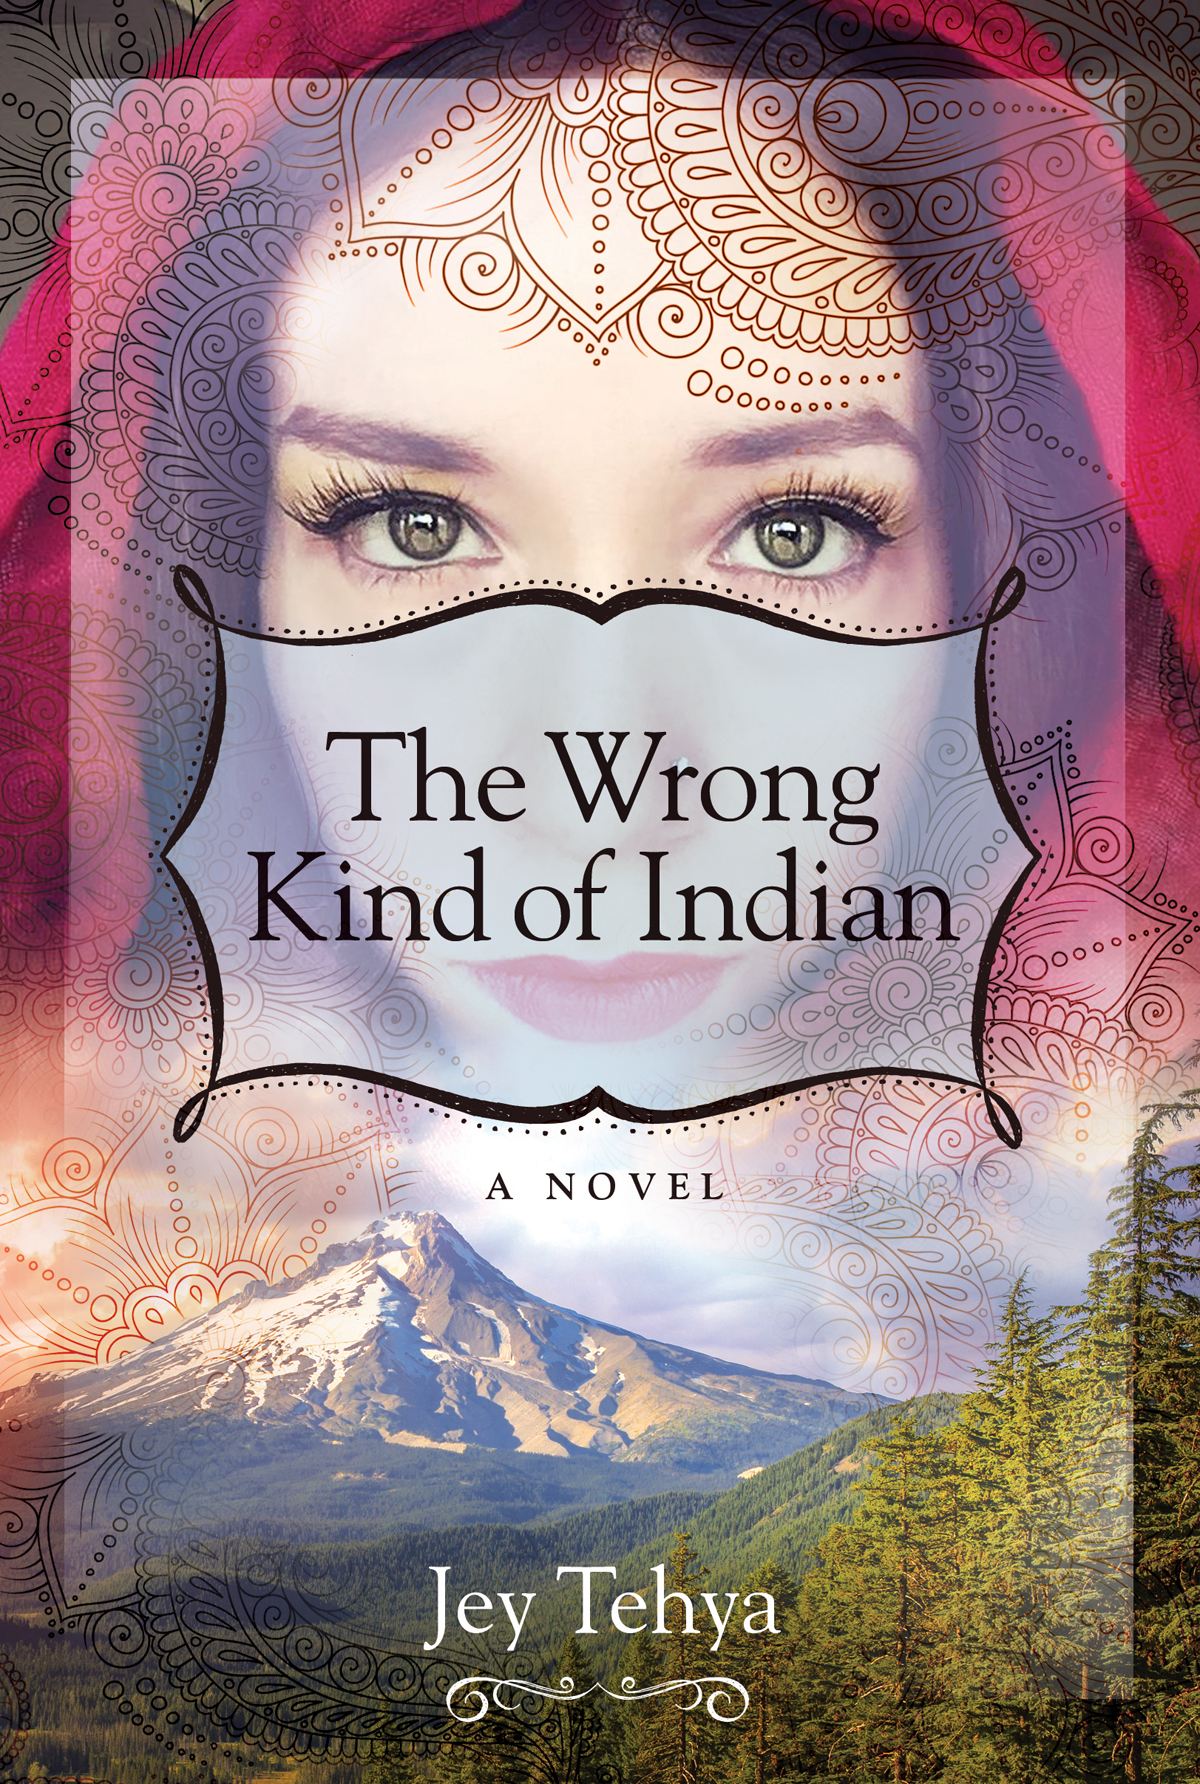 The Wrong Kind of Indian (Wyatt-MacKenzie, Jan. 2017)